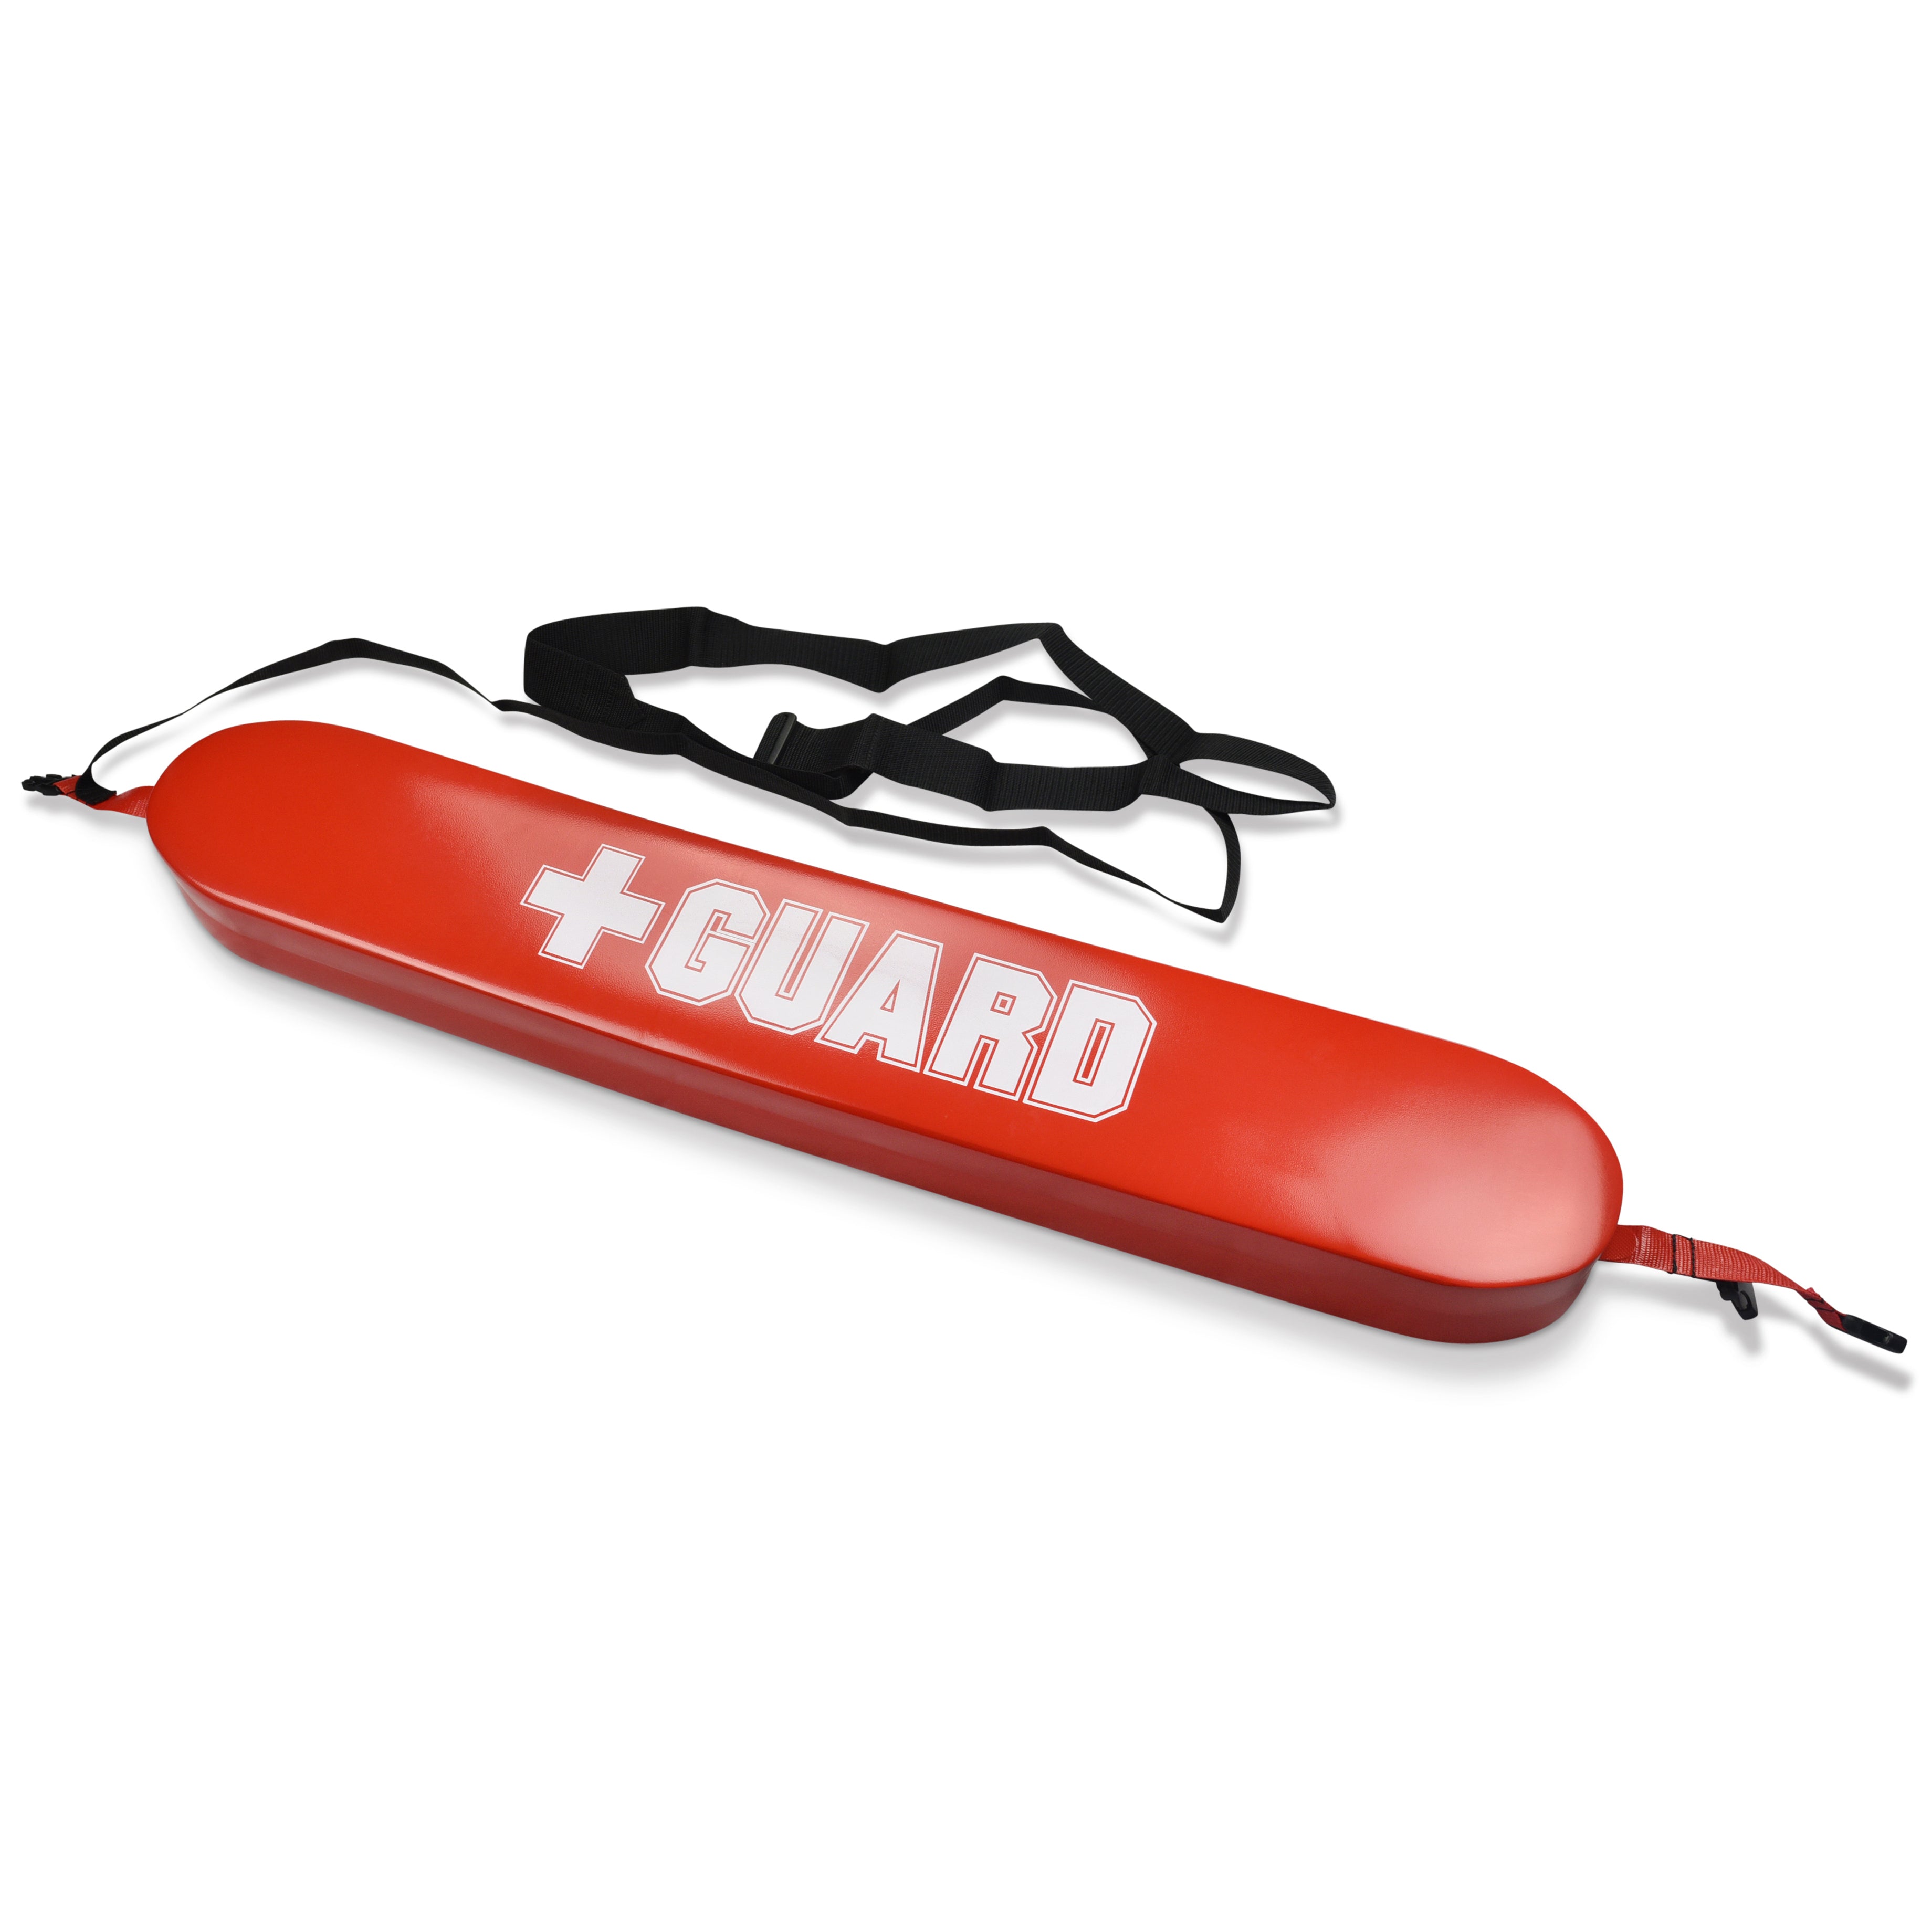 Lifeguard Rescue Tube - 40